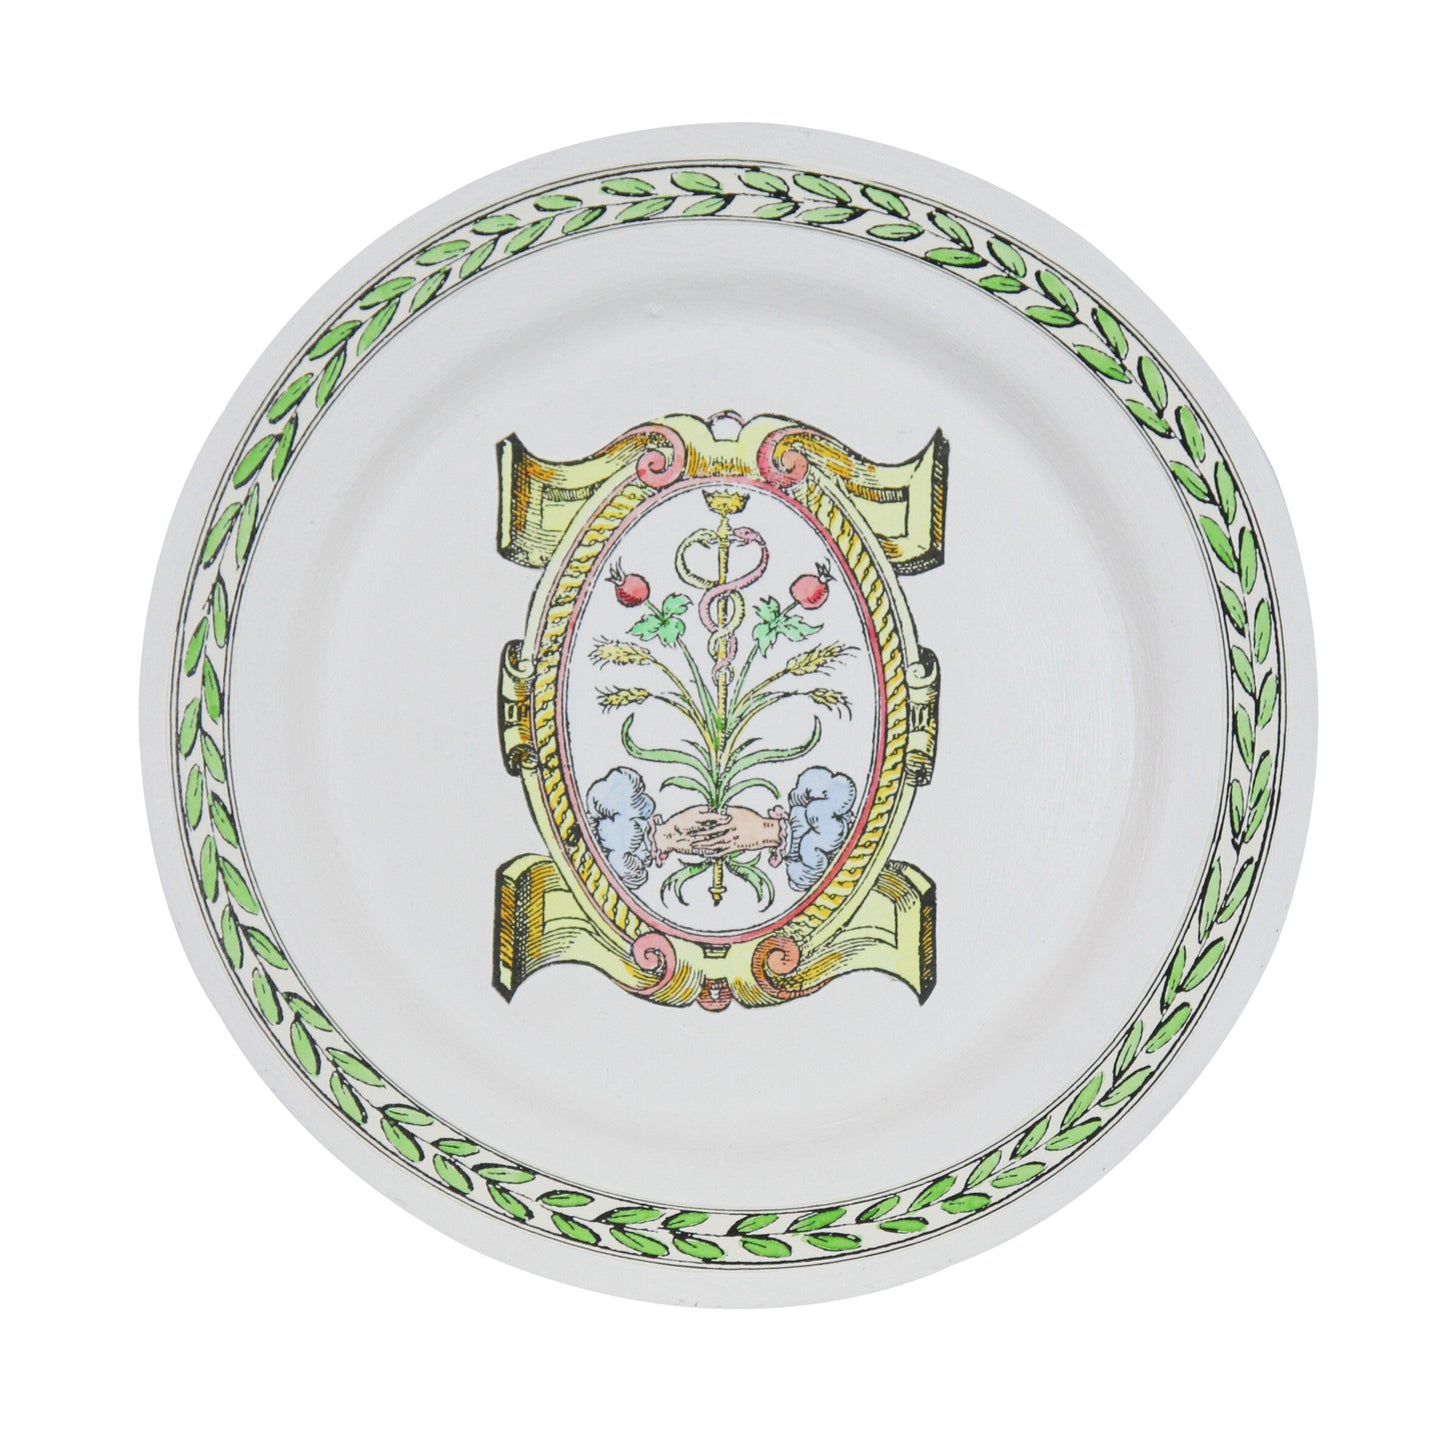 Decorative plate | TOGETHER